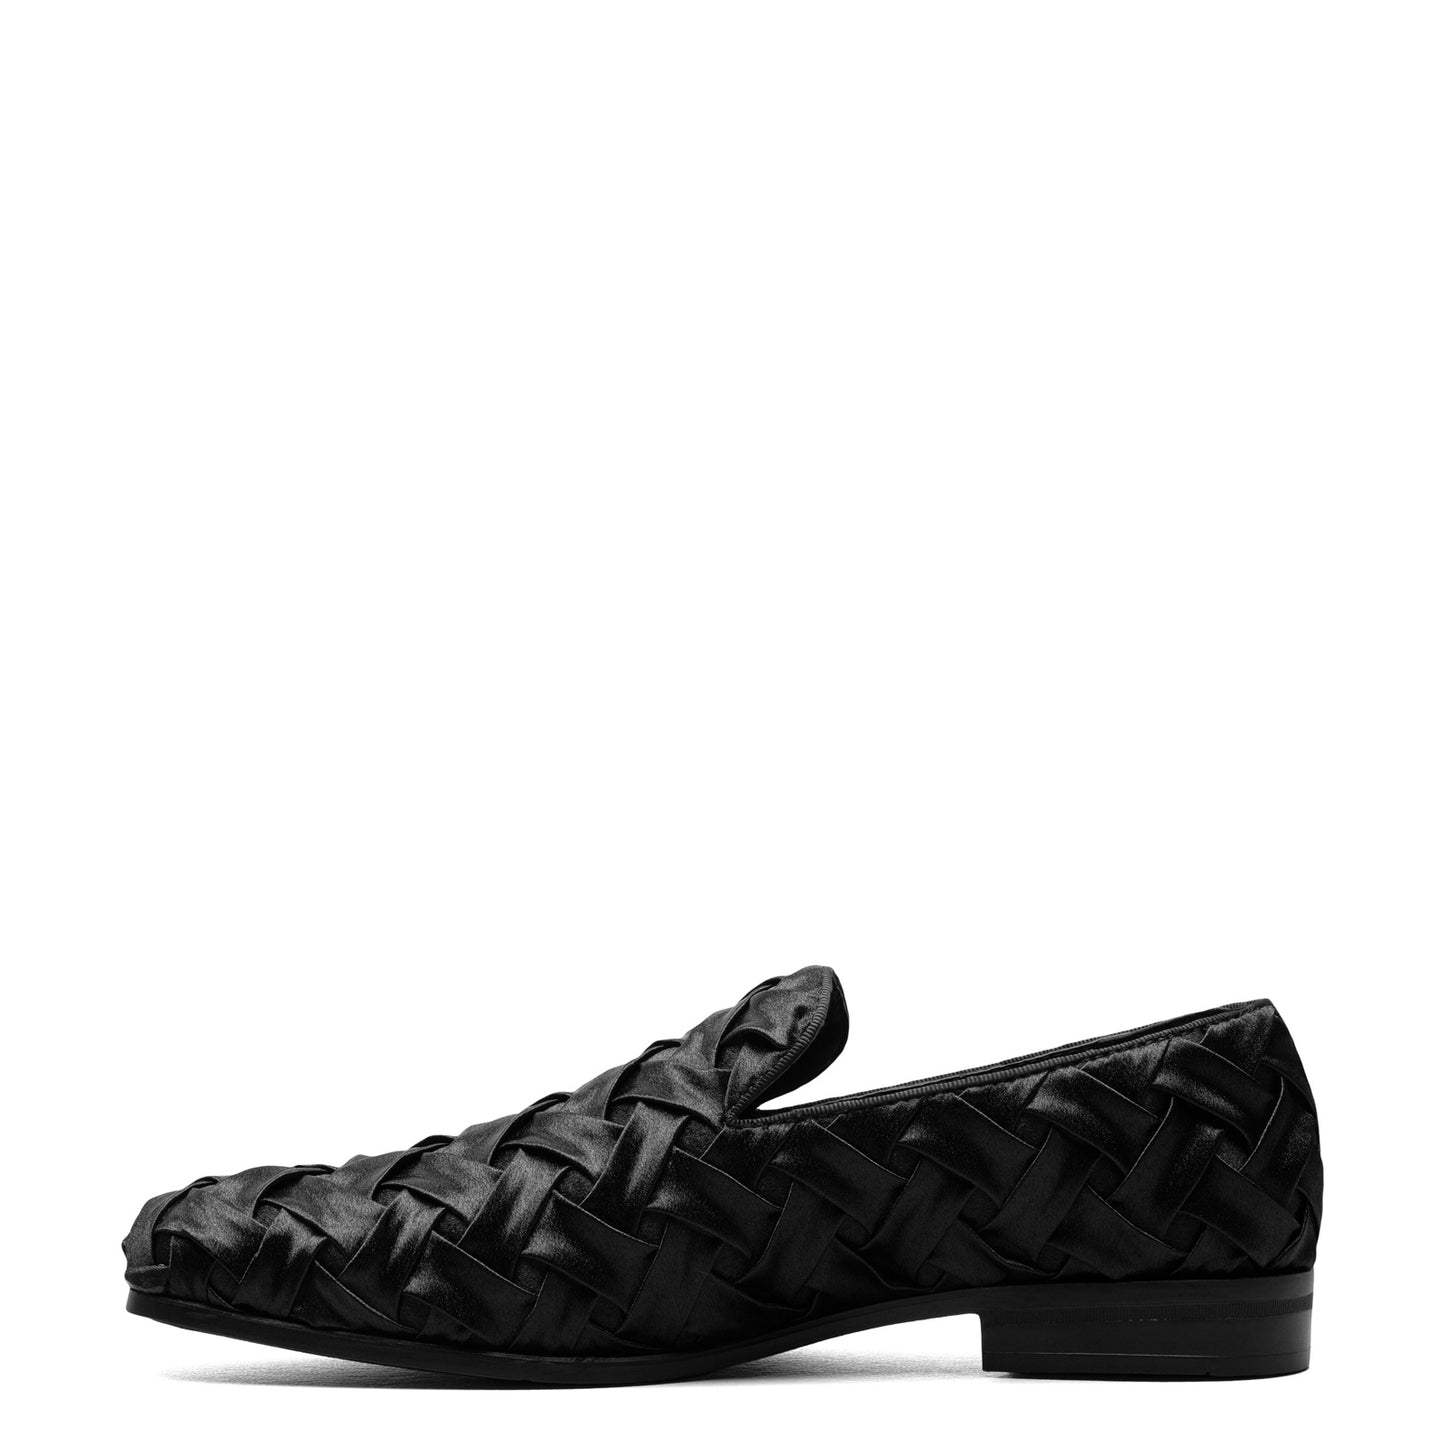 Peltz Shoes  Men's Stacy Adams Savior Loafer Black 25611-001